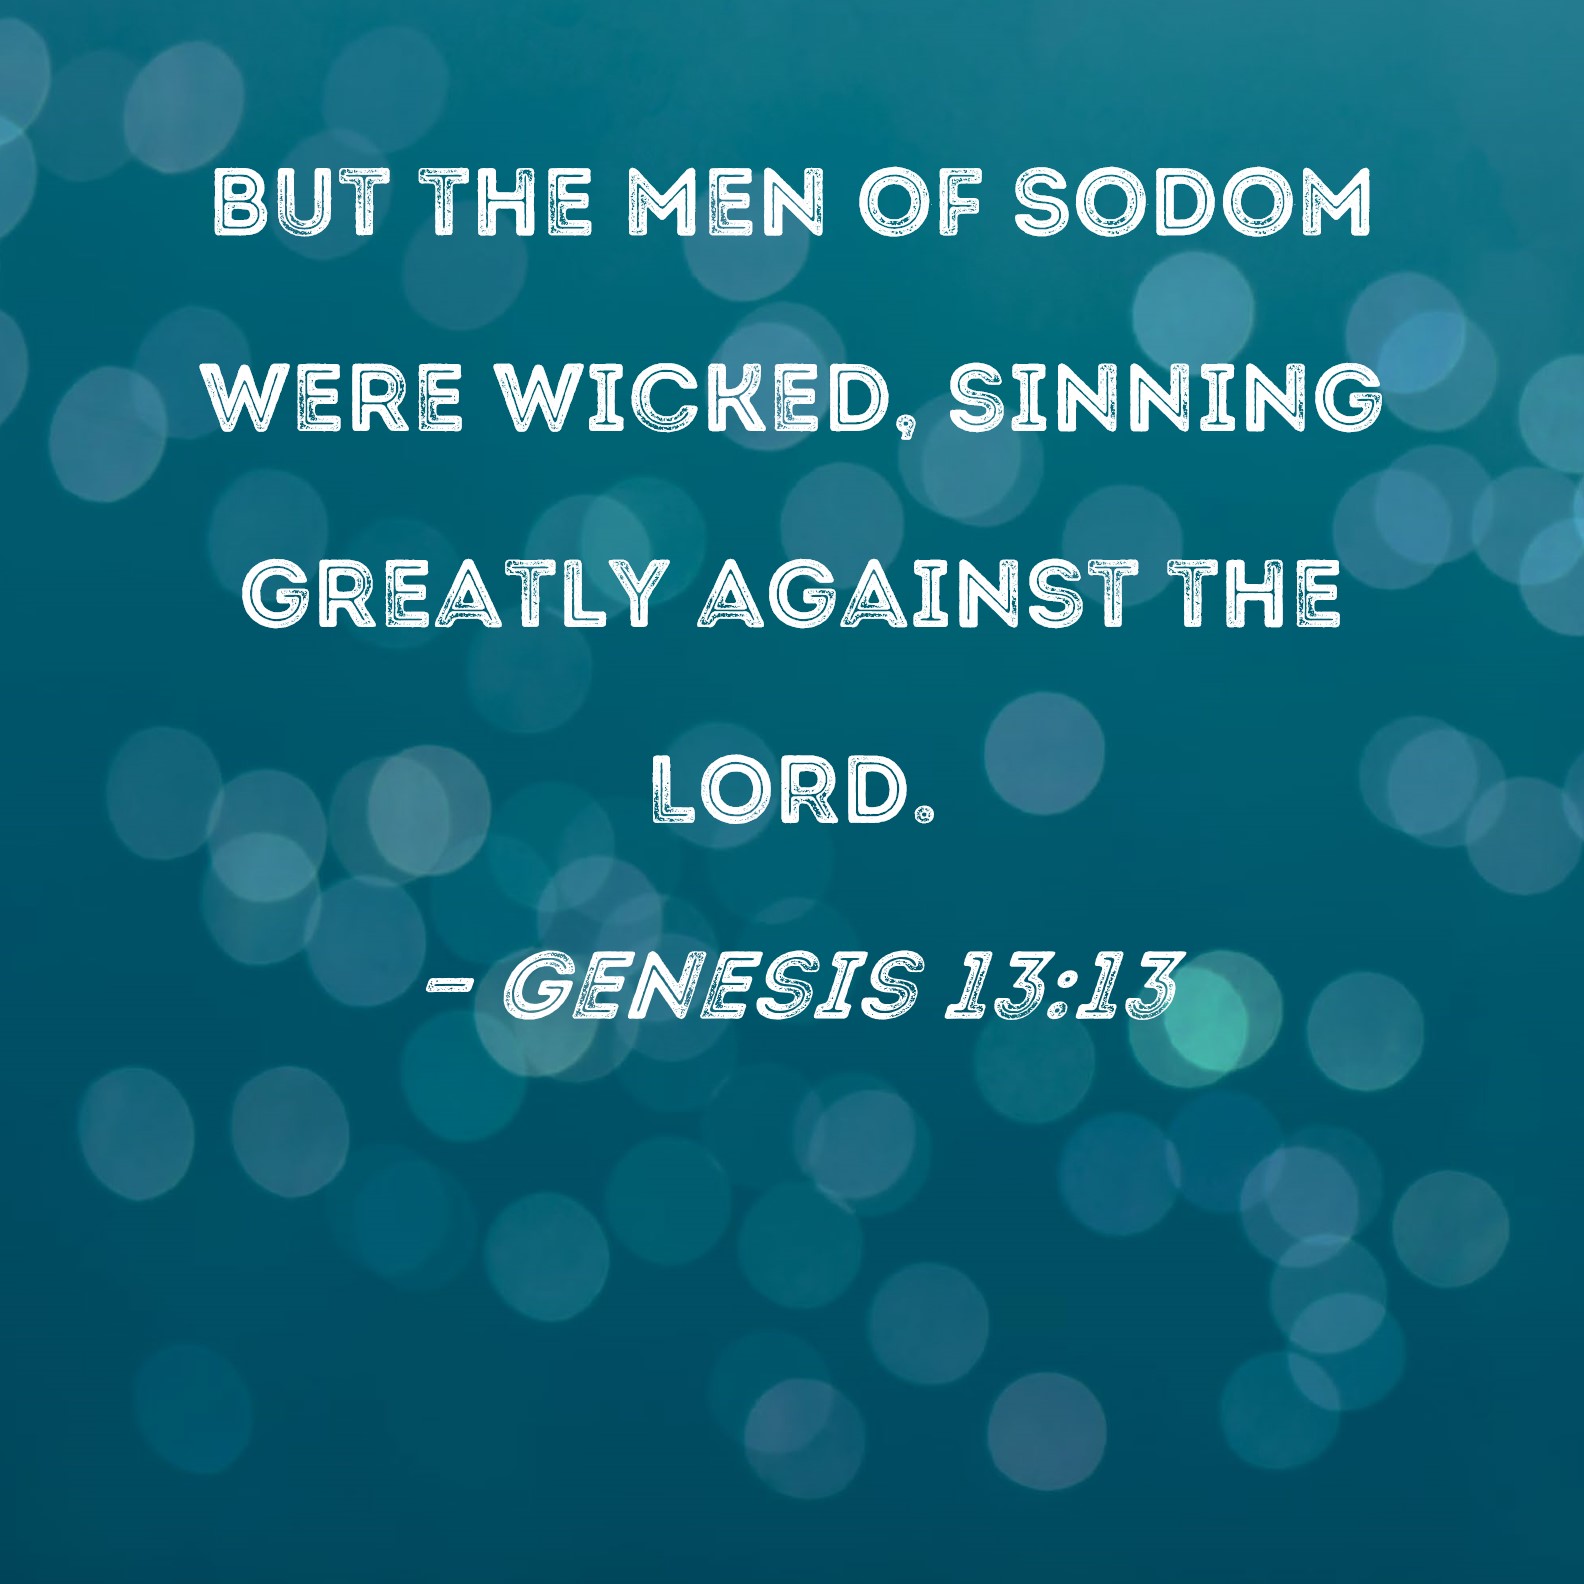 Genesis 13:13 But the men of Sodom were wicked, sinning greatly